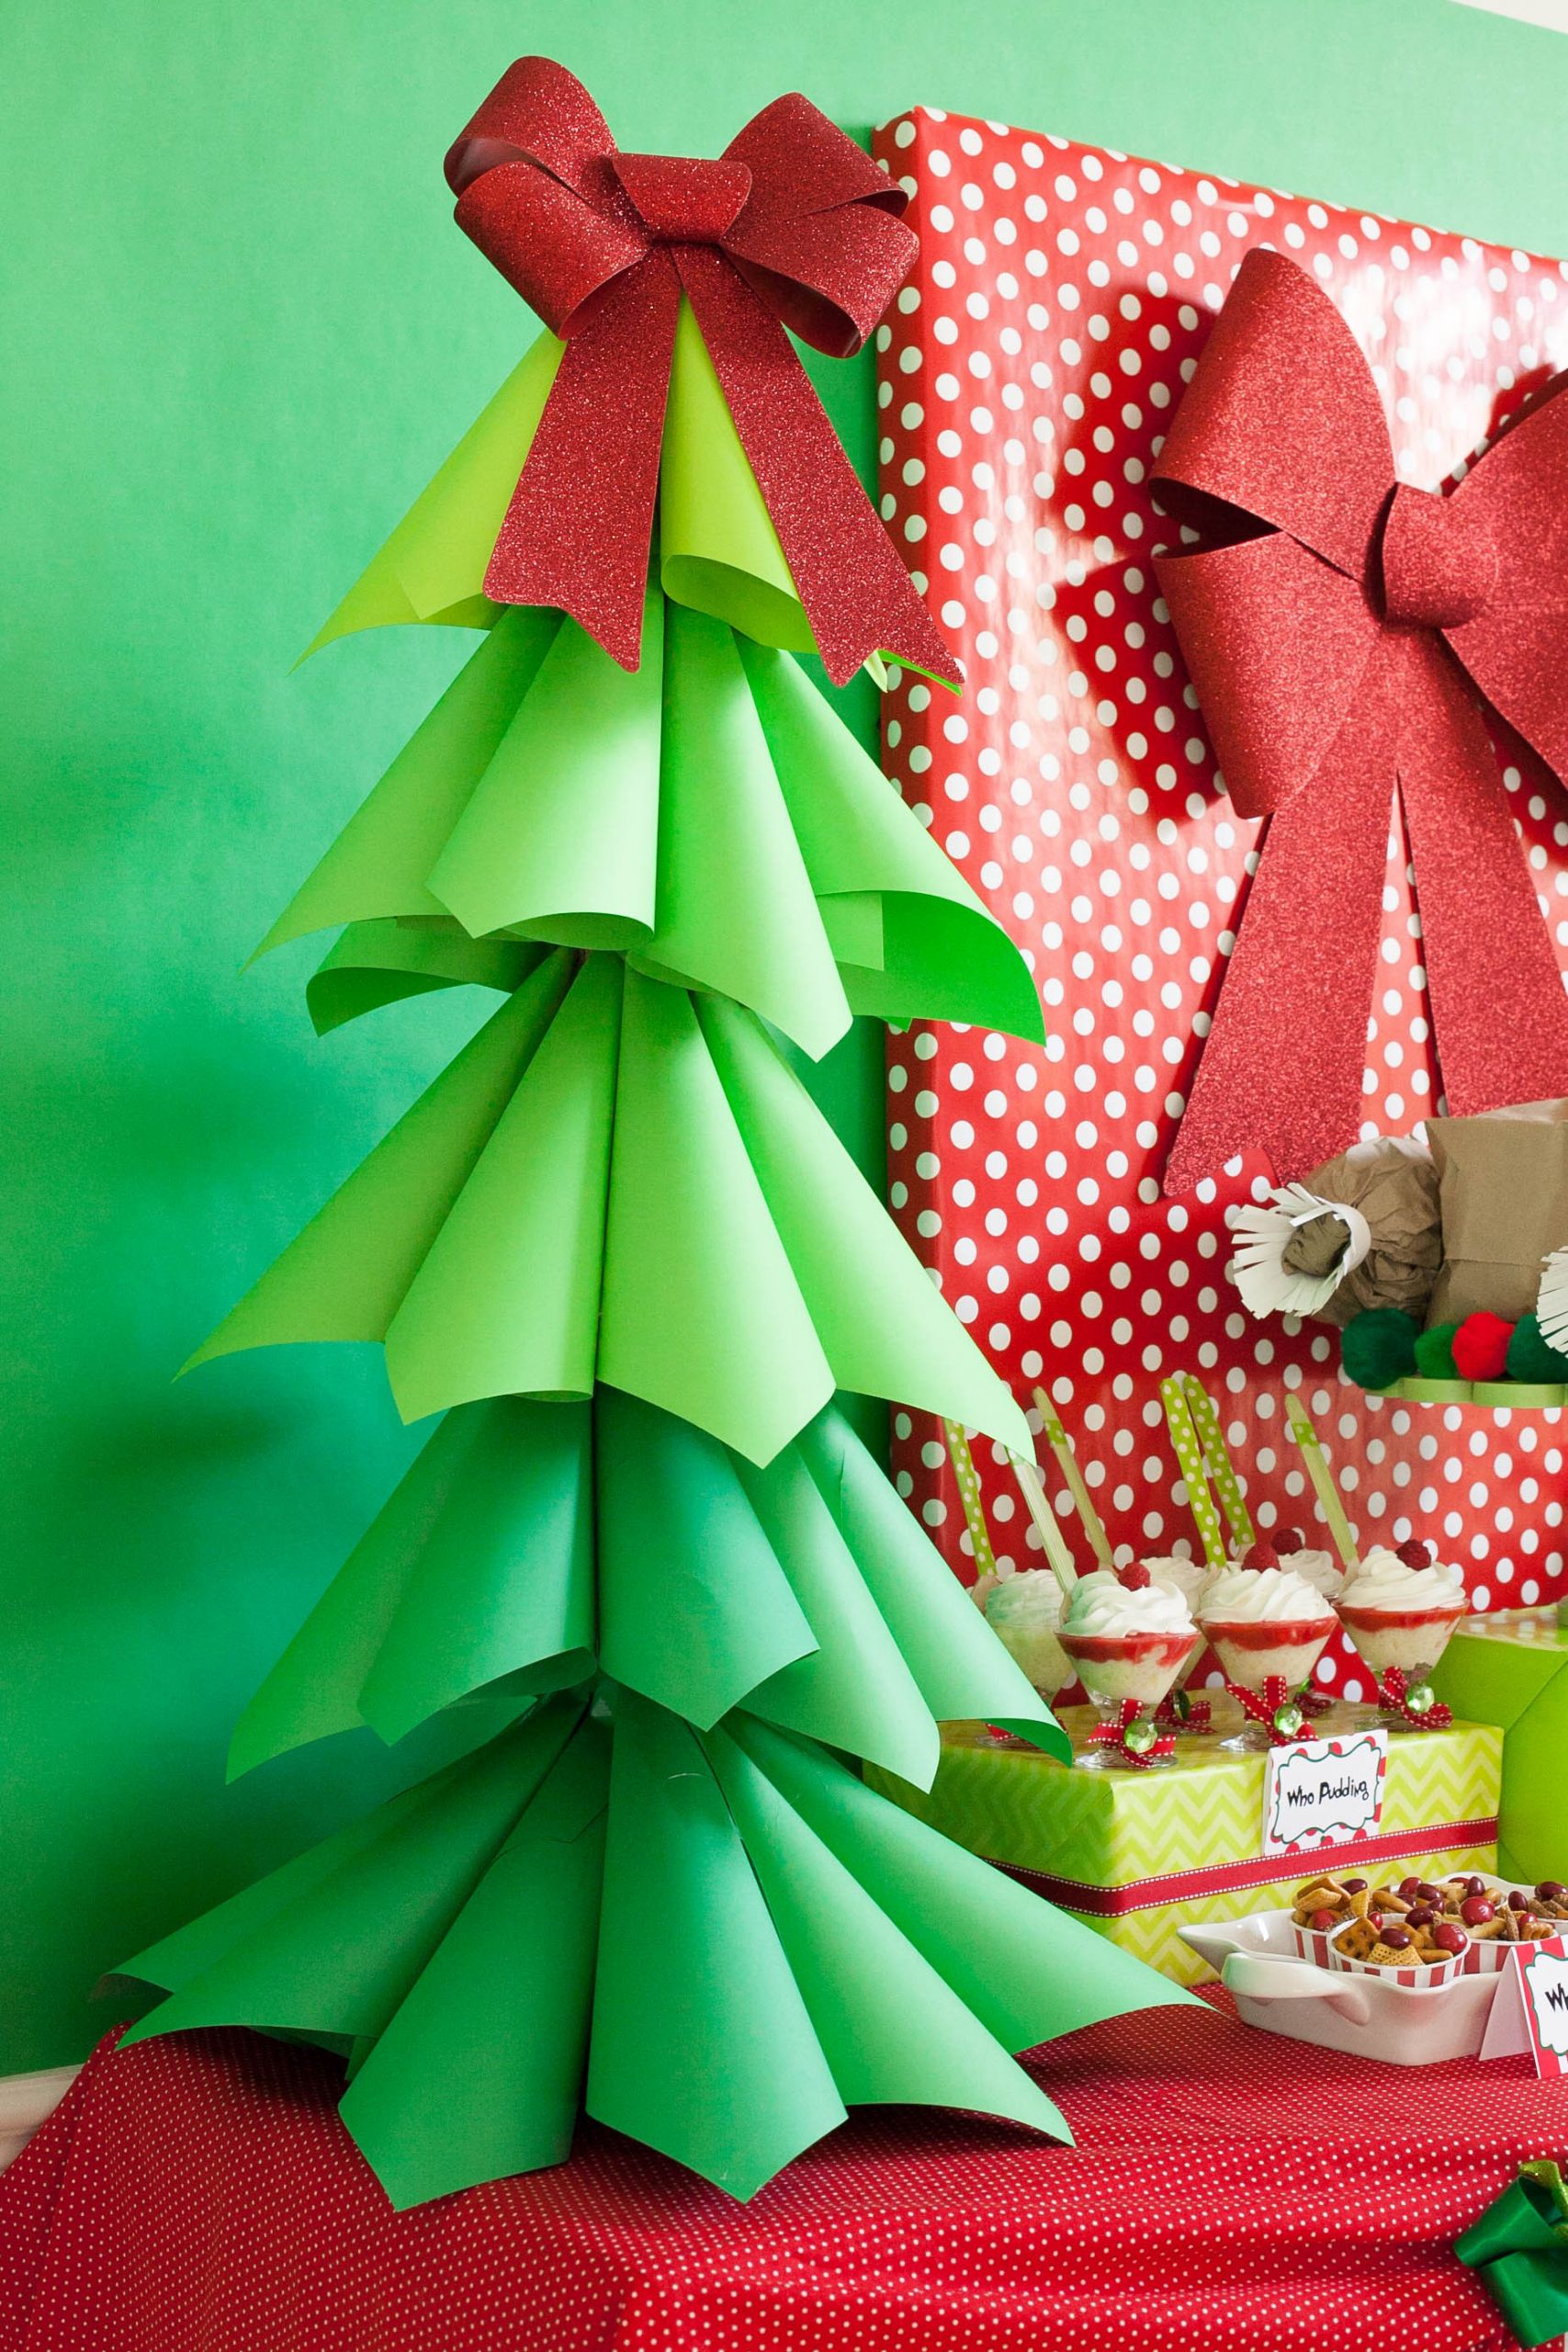 DIY Christmas Tree Decor
 Giant Ombre Paper Cone Christmas Trees a DIY Tutorial